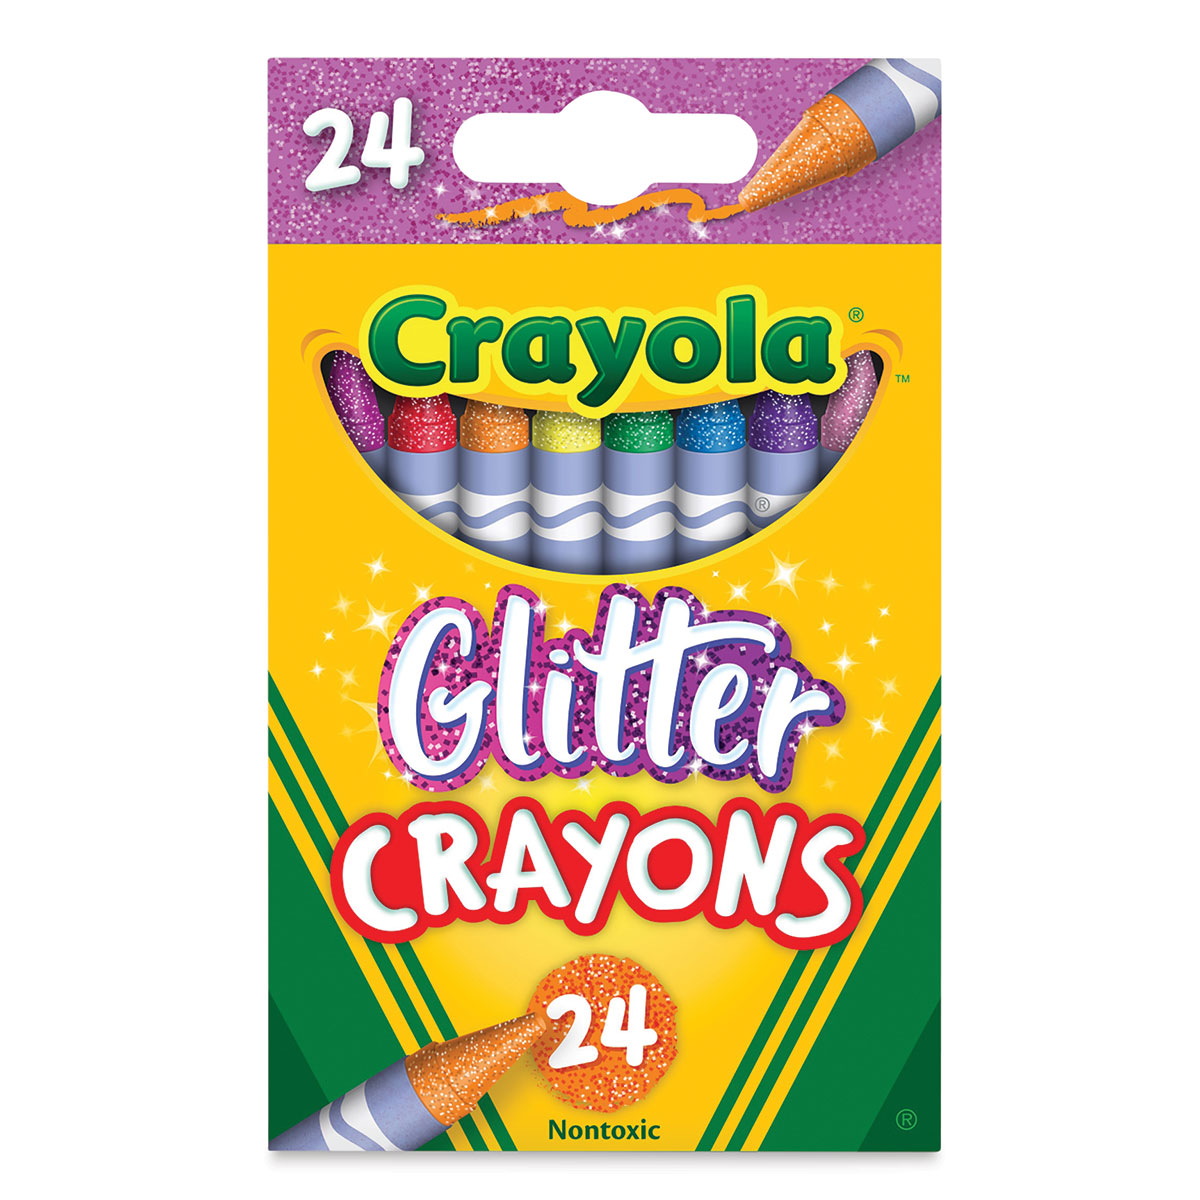 Crayola Crayon Box Retro Twist Spout Water Bottle and Sticker Set